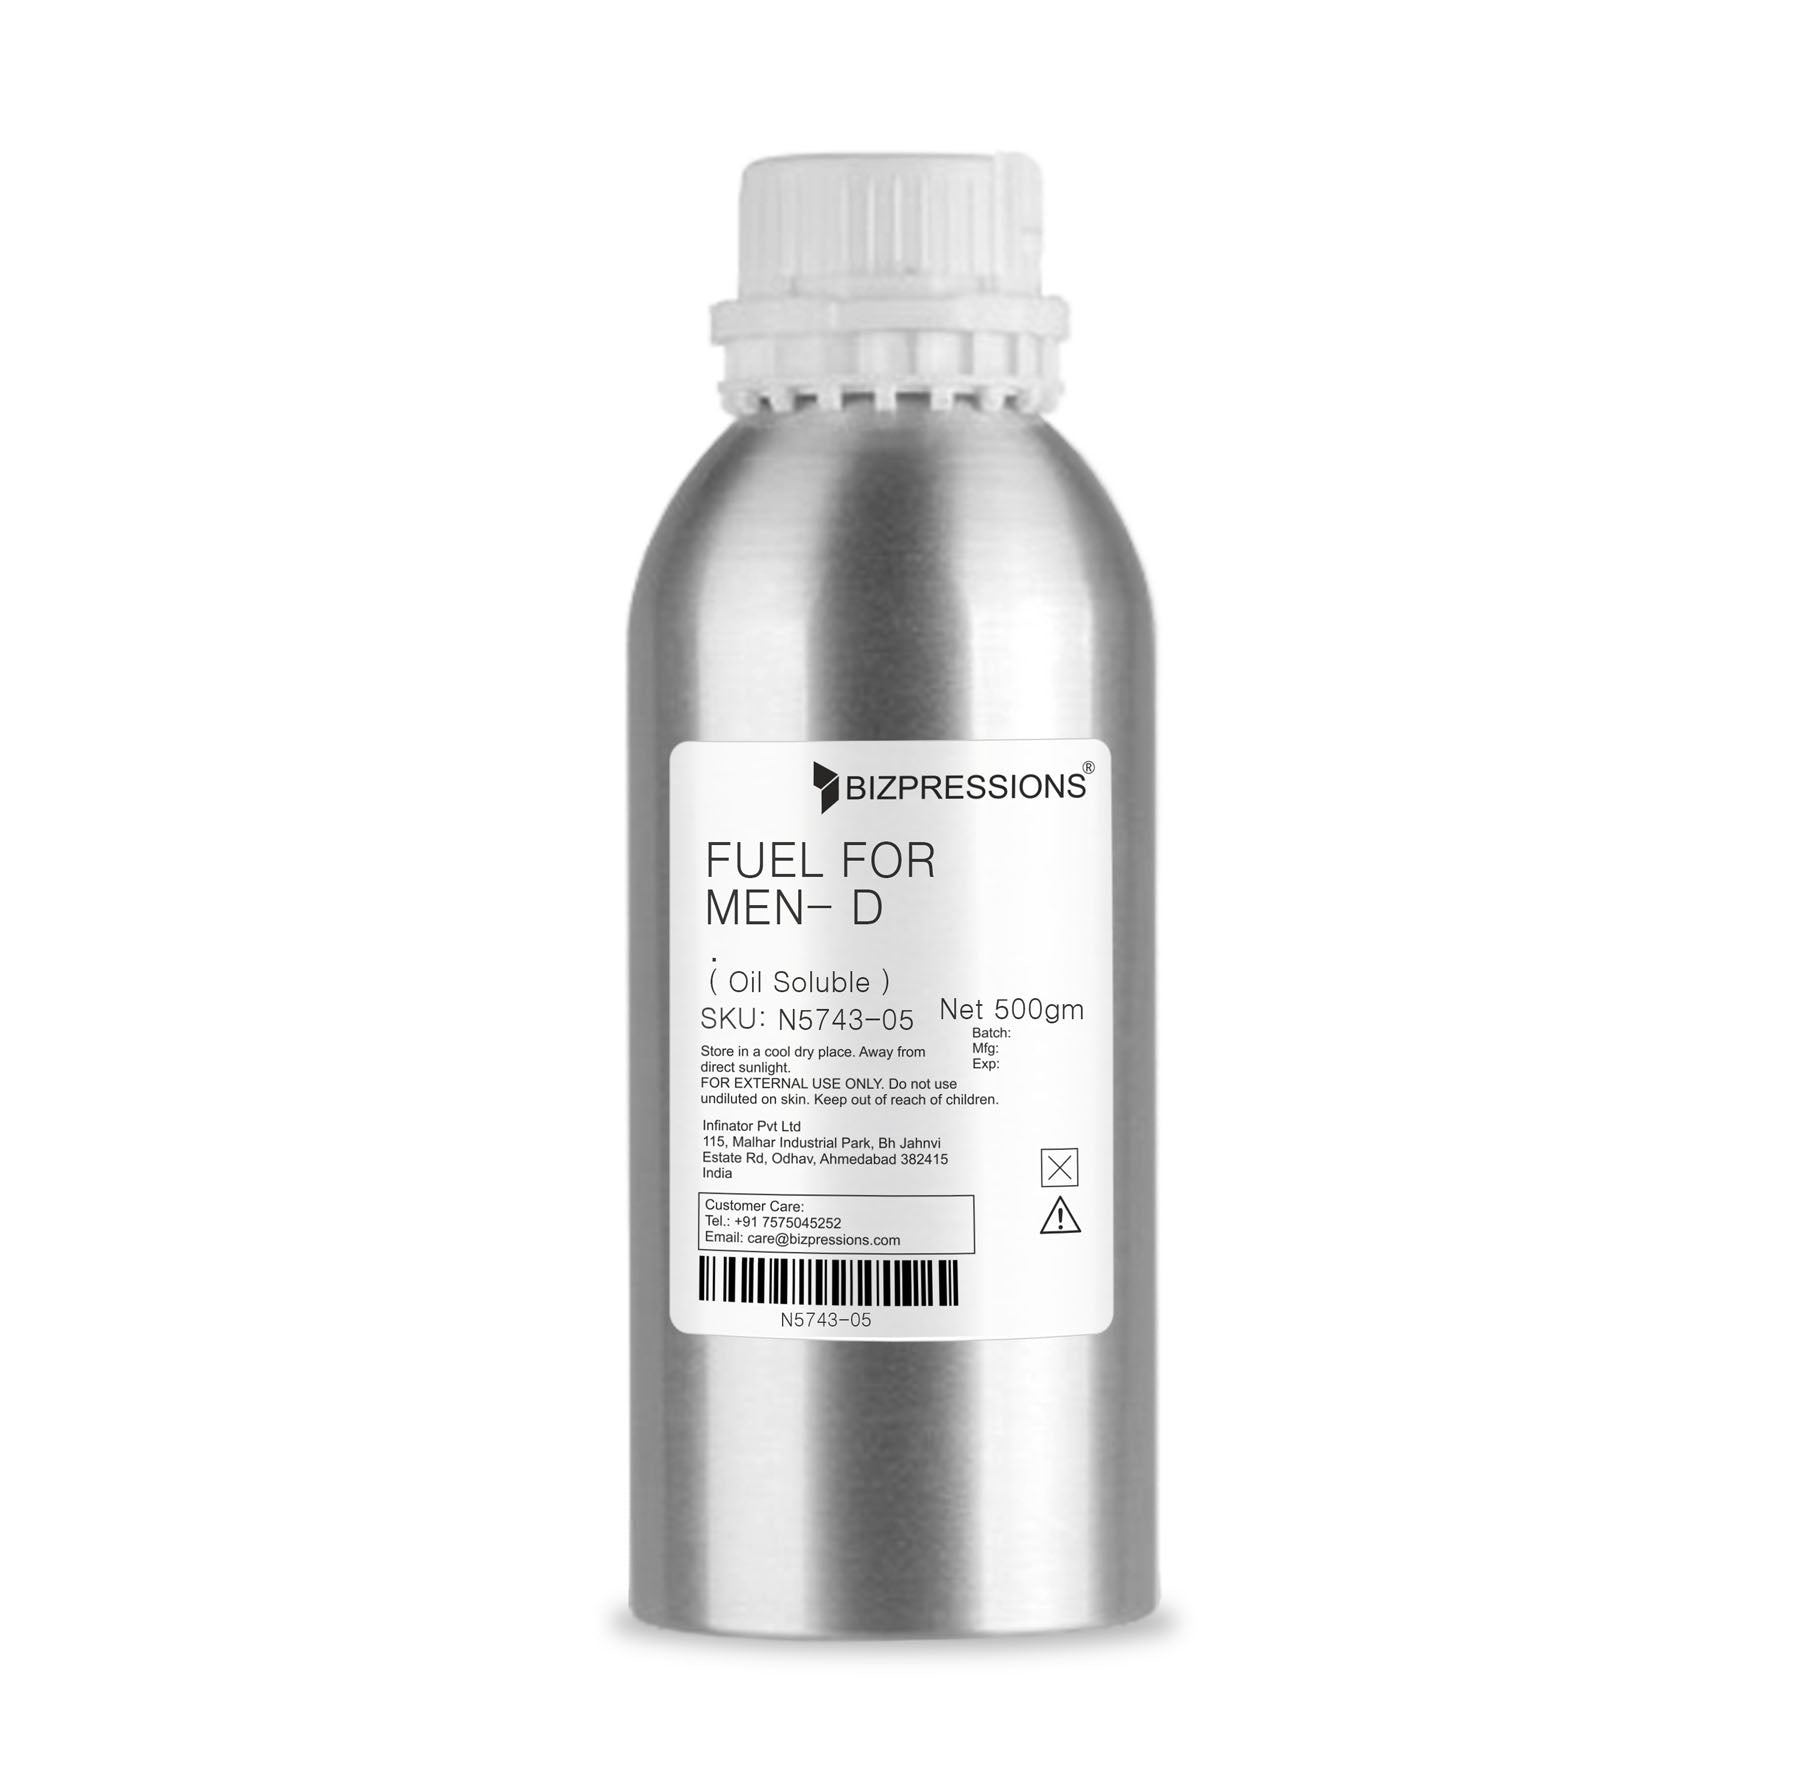 FUEL FOR MEN- D - Fragrance ( Oil Soluble ) - 500 gm